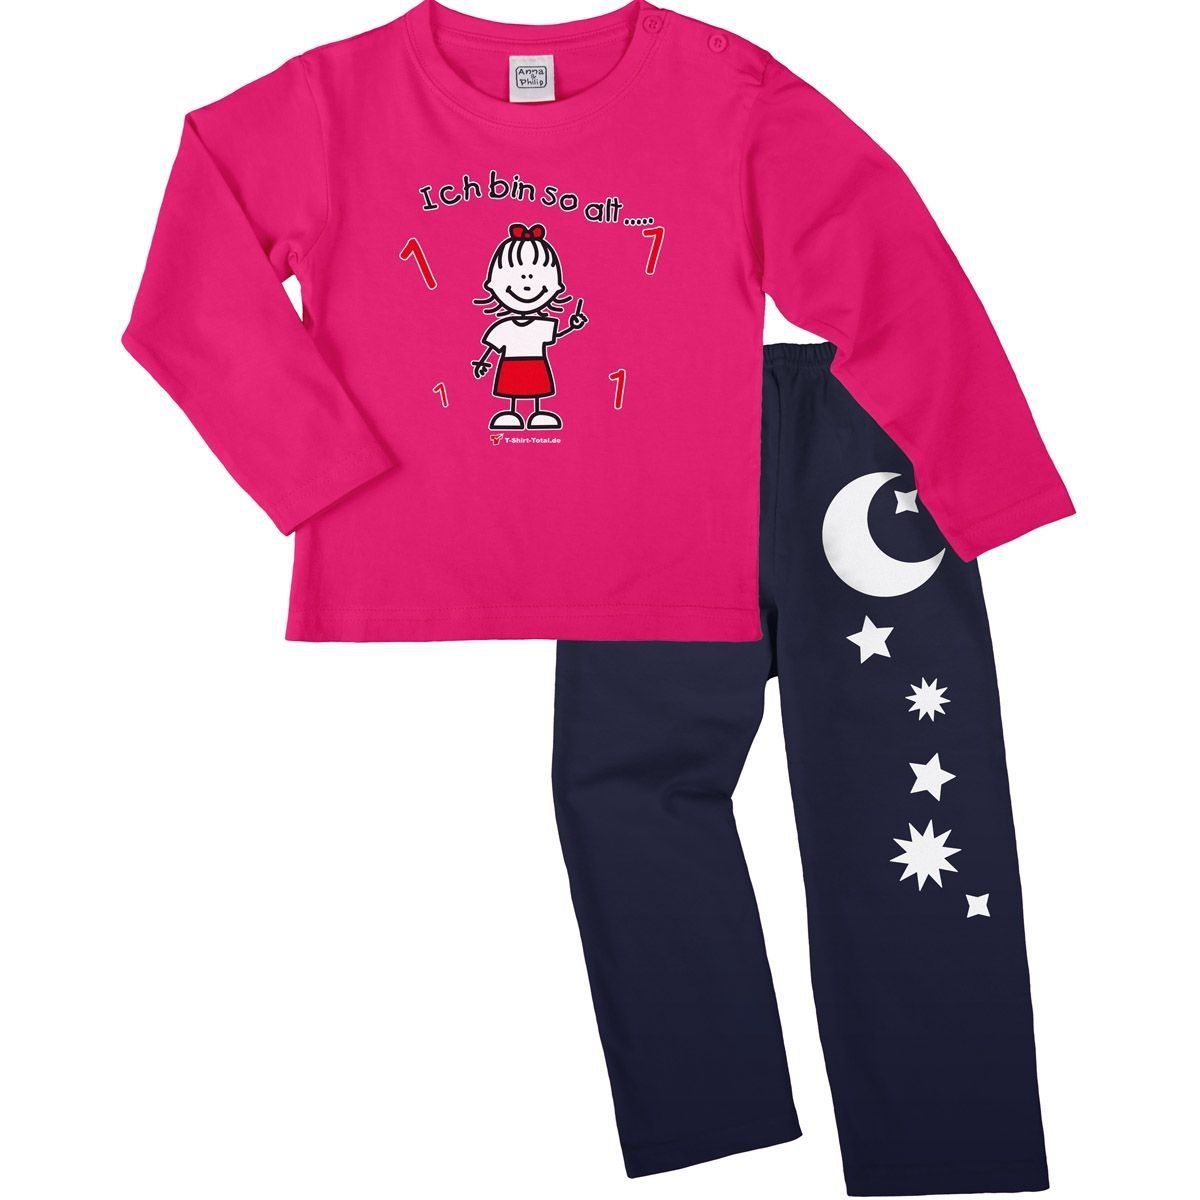 Mädchen so alt 1 Pyjama Set pink / navy 68 / 74